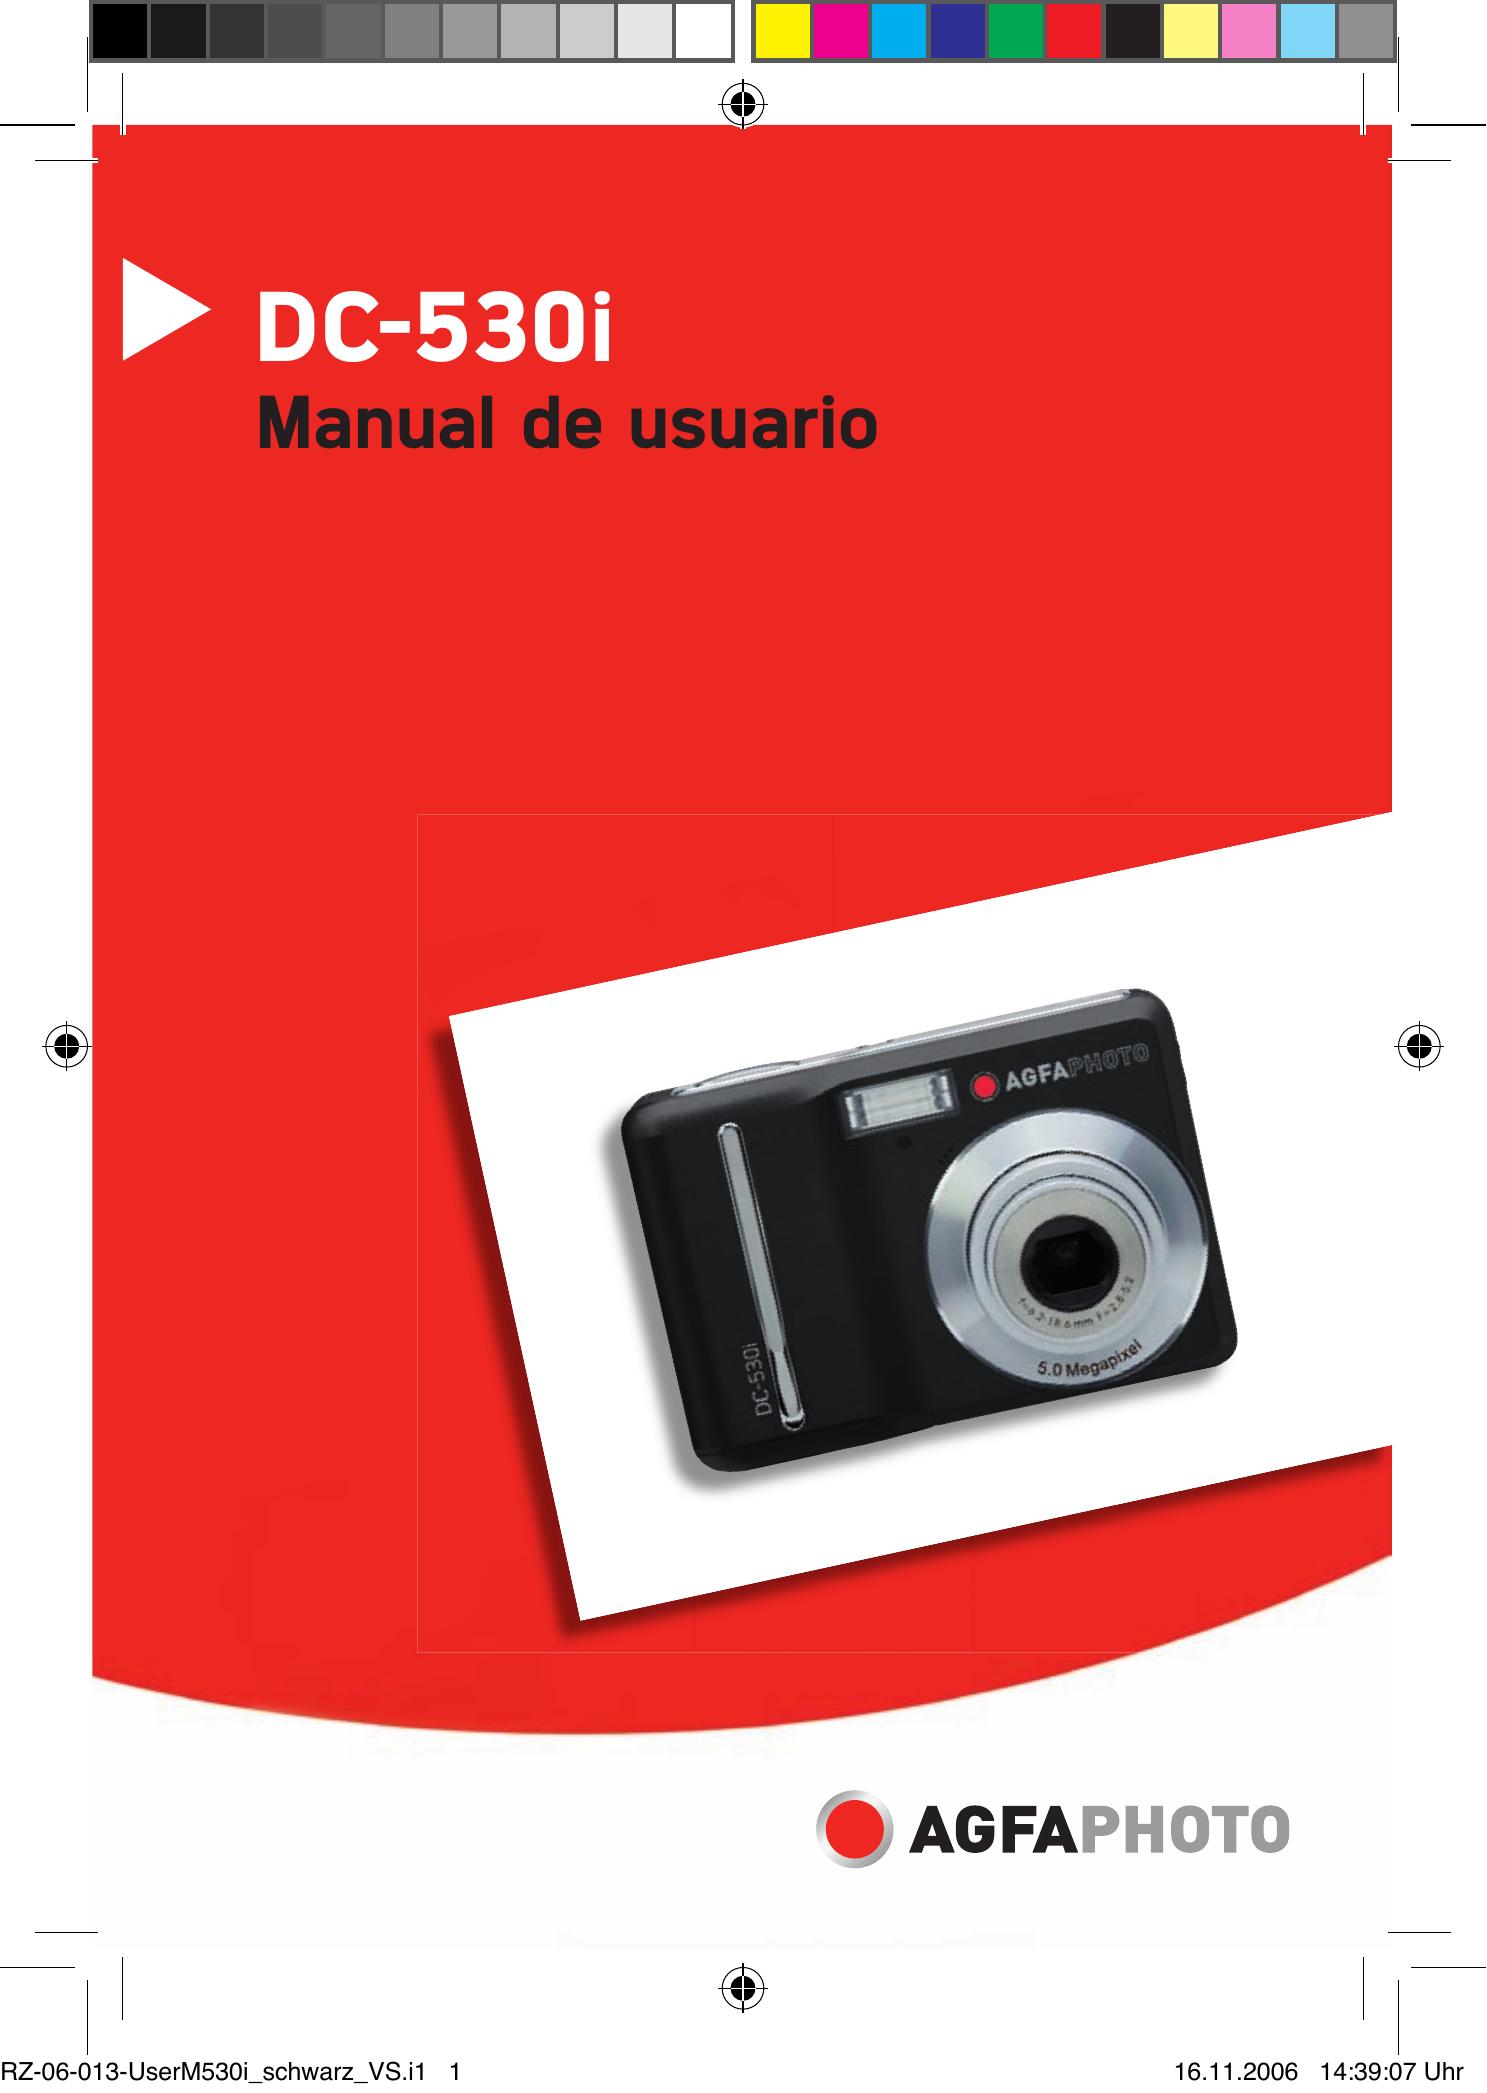 AGFA DC-530i Digital Camera User Manual